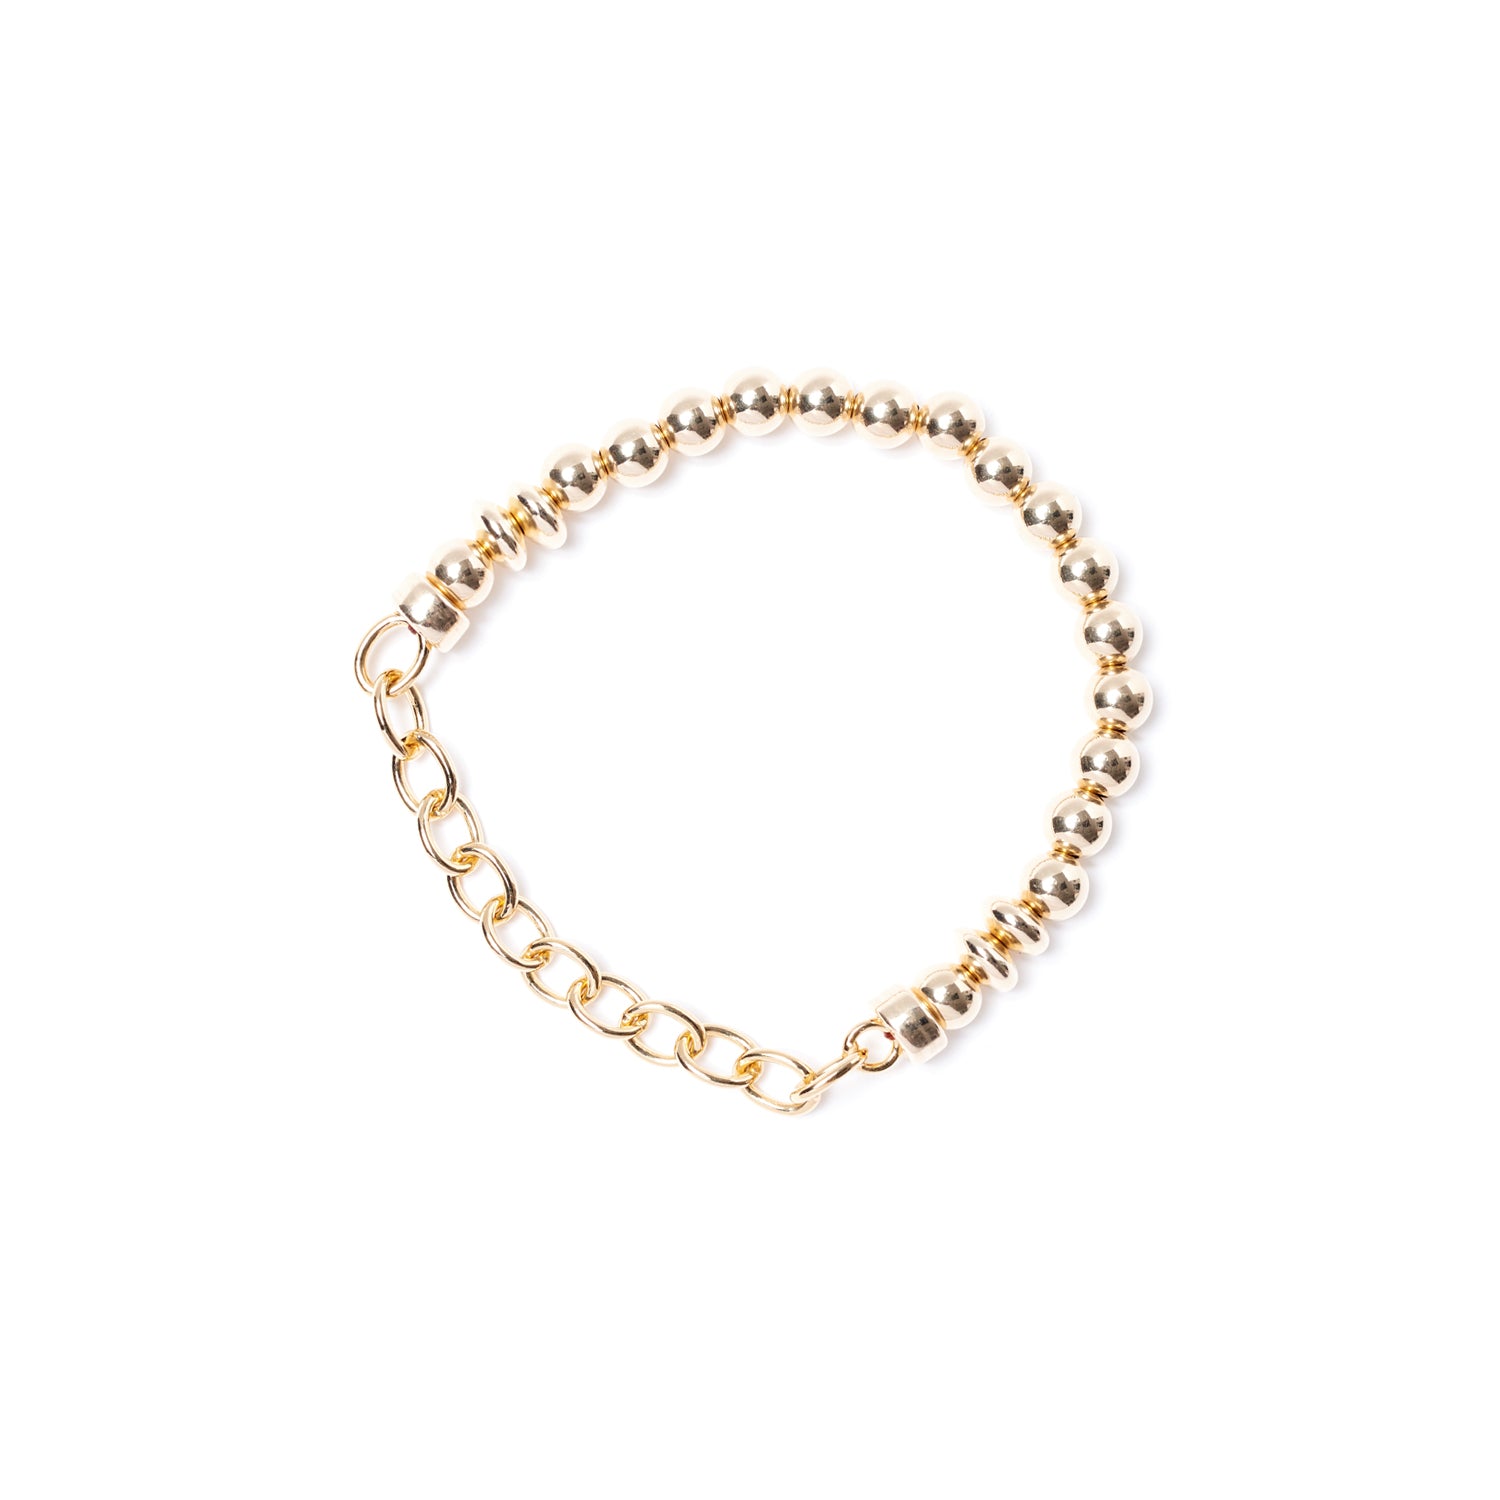 be established women's bracelet sterling silver 14kt gold vermeil handcrafted in canada 